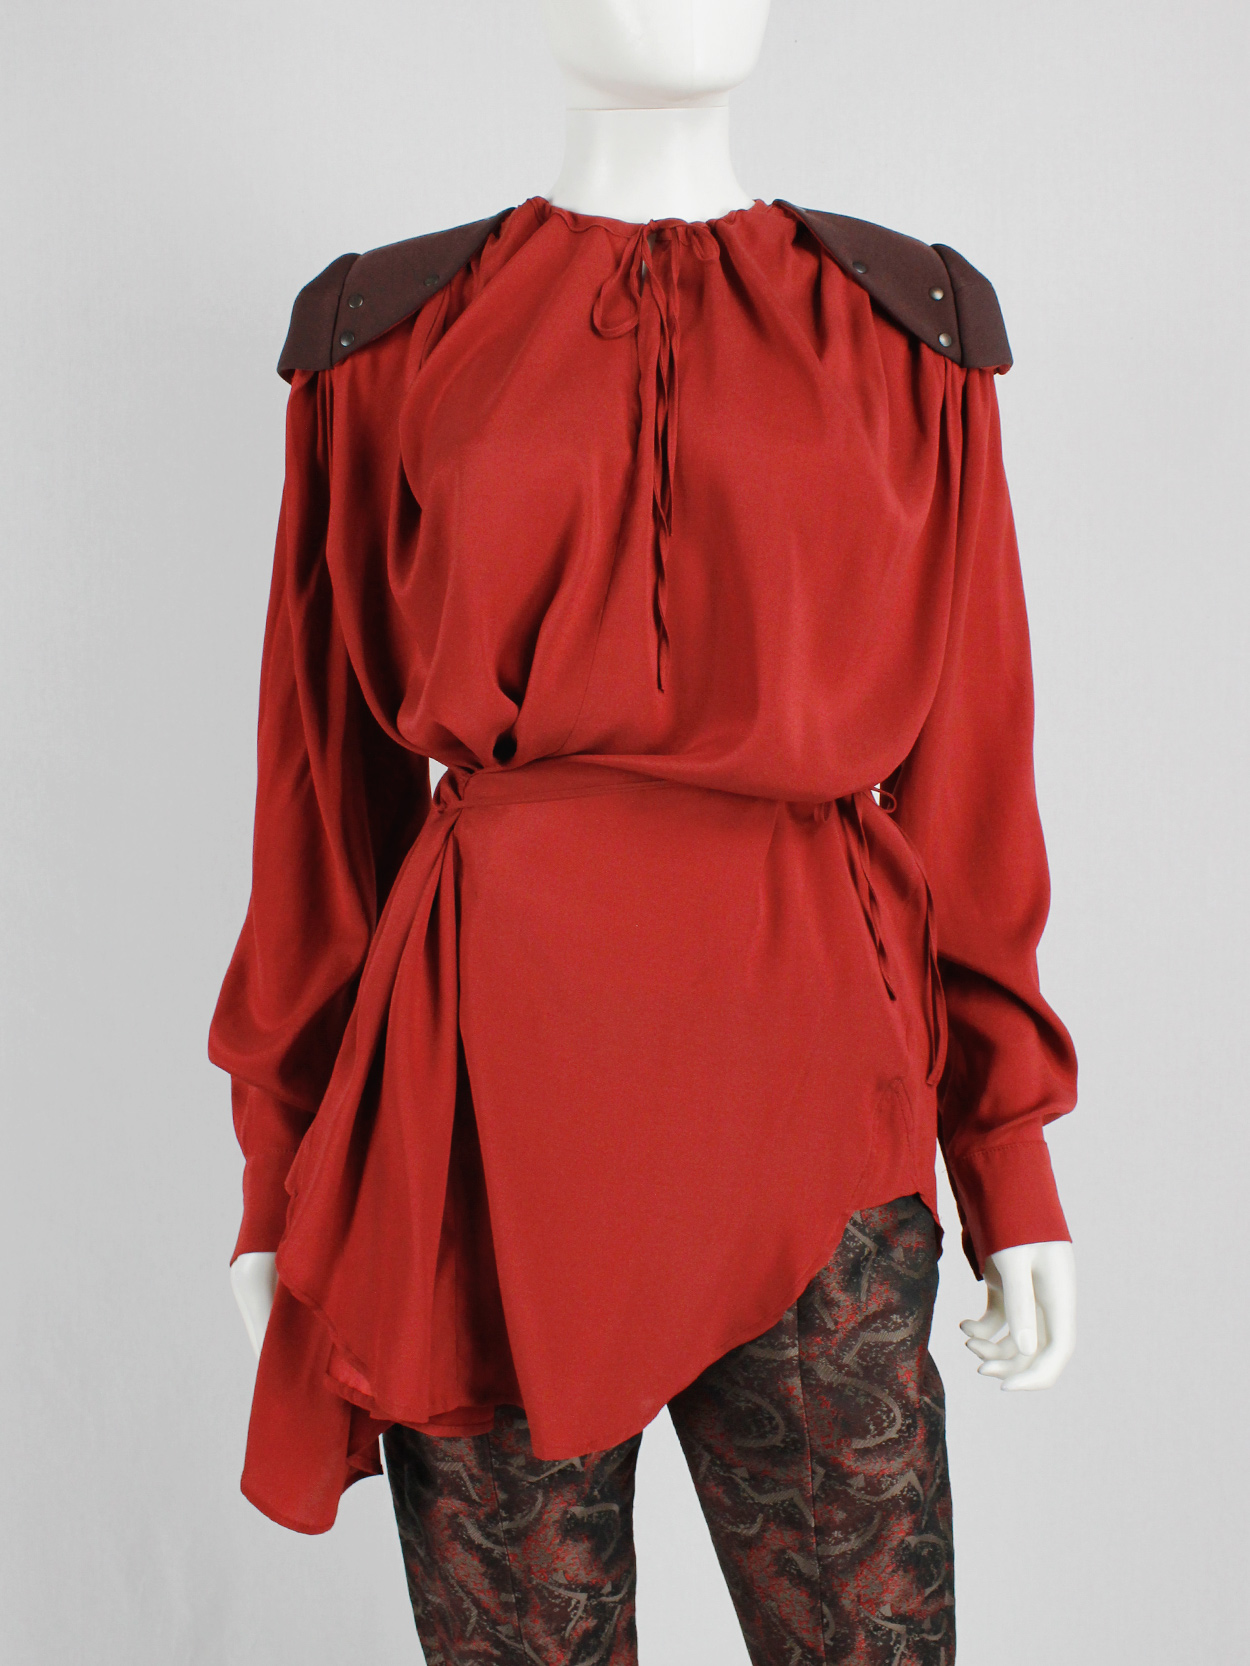 Vandevorst red blouse with brown riveted shoulder pads runway fall 2010 (6)